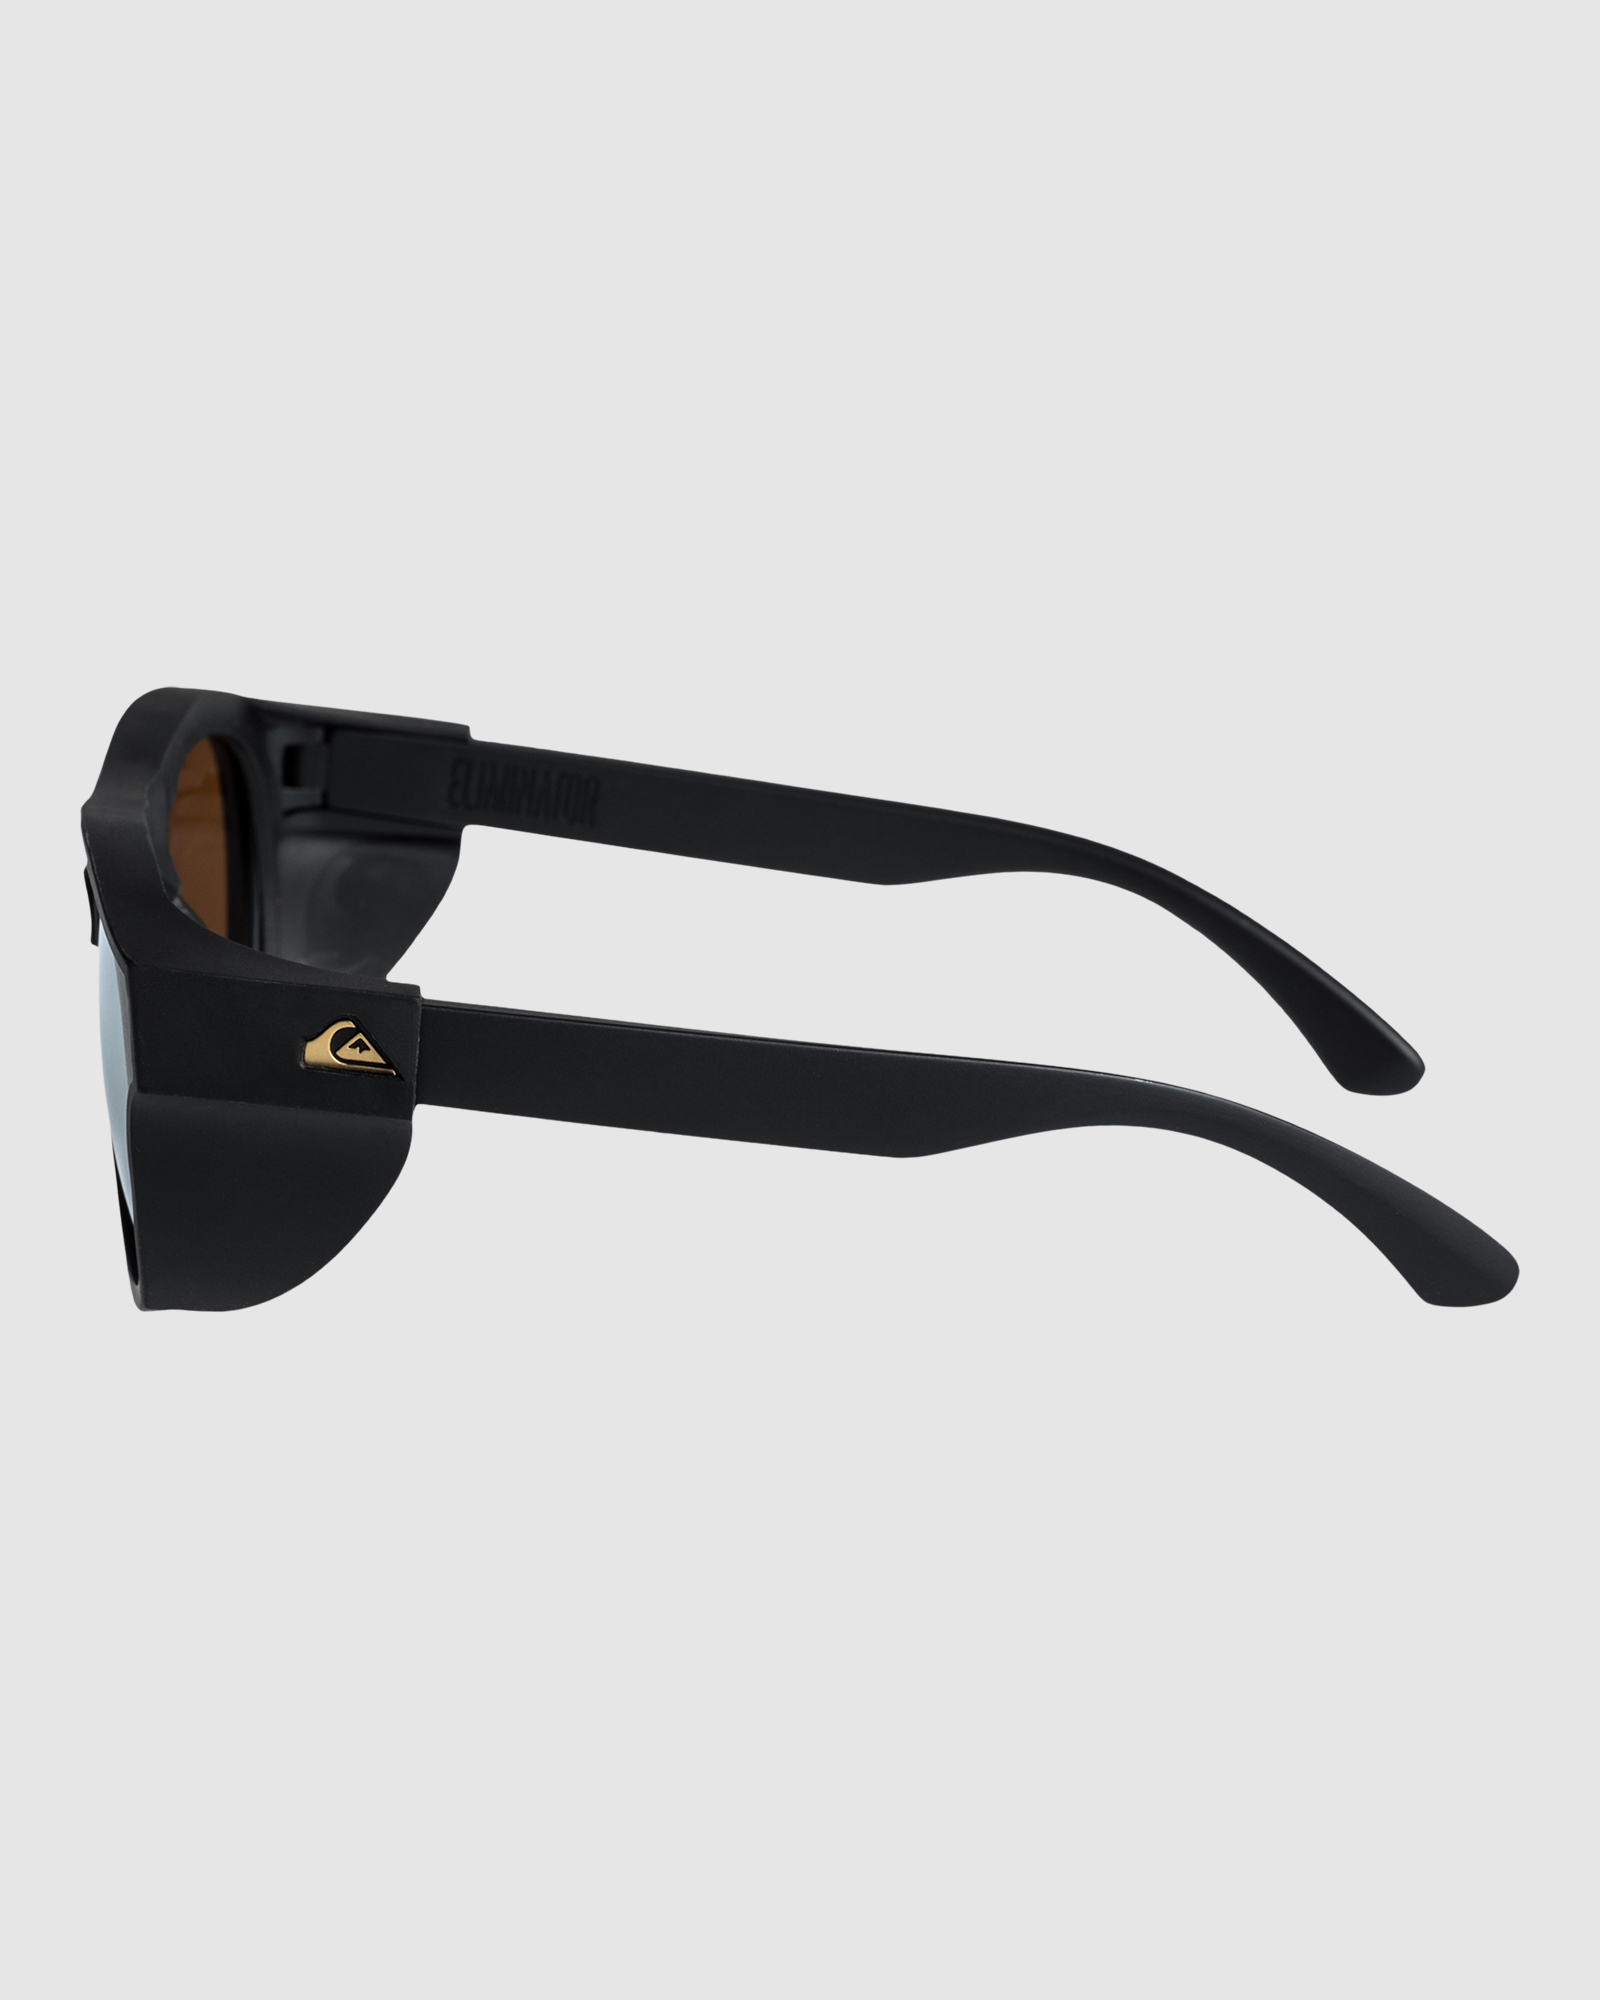 Quiksilver Eliminator+ - Sunglasses For Men - Black Flash Gold | SurfStitch